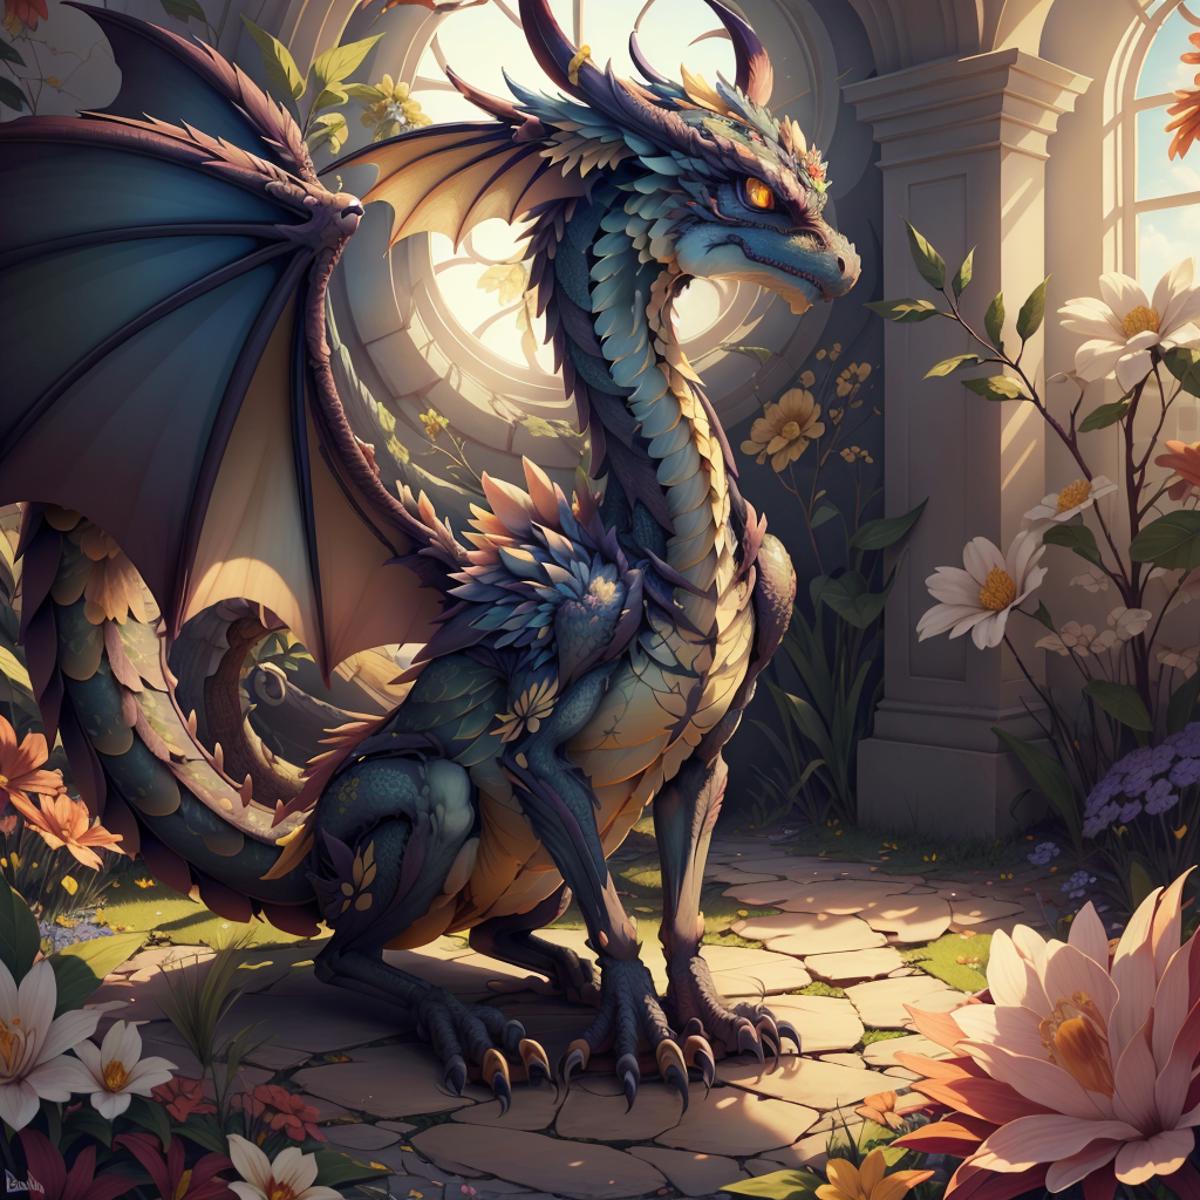 An artistic dragon drawing in a flower garden setting.